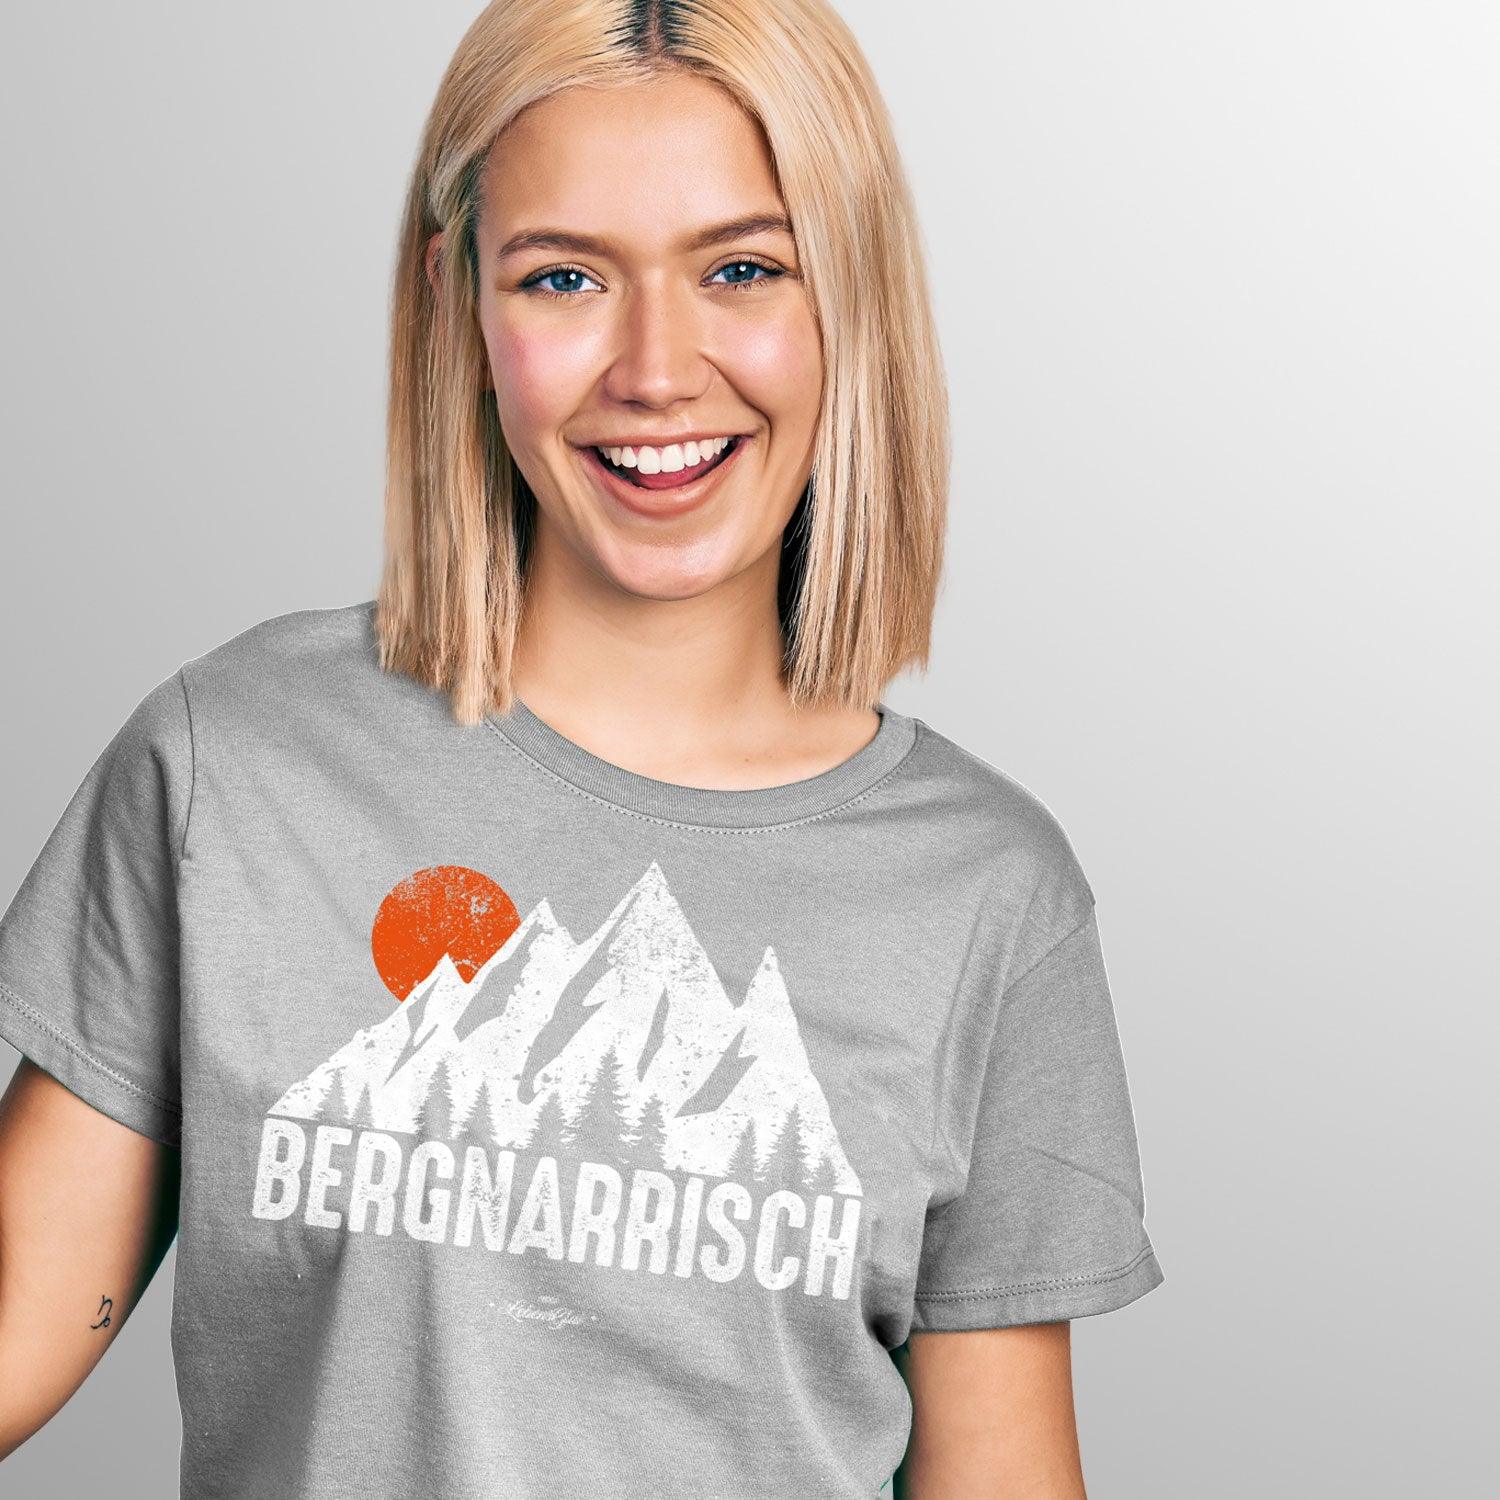 Damen T-Shirt "Bergnarrisch" - bavariashop - mei LebensGfui